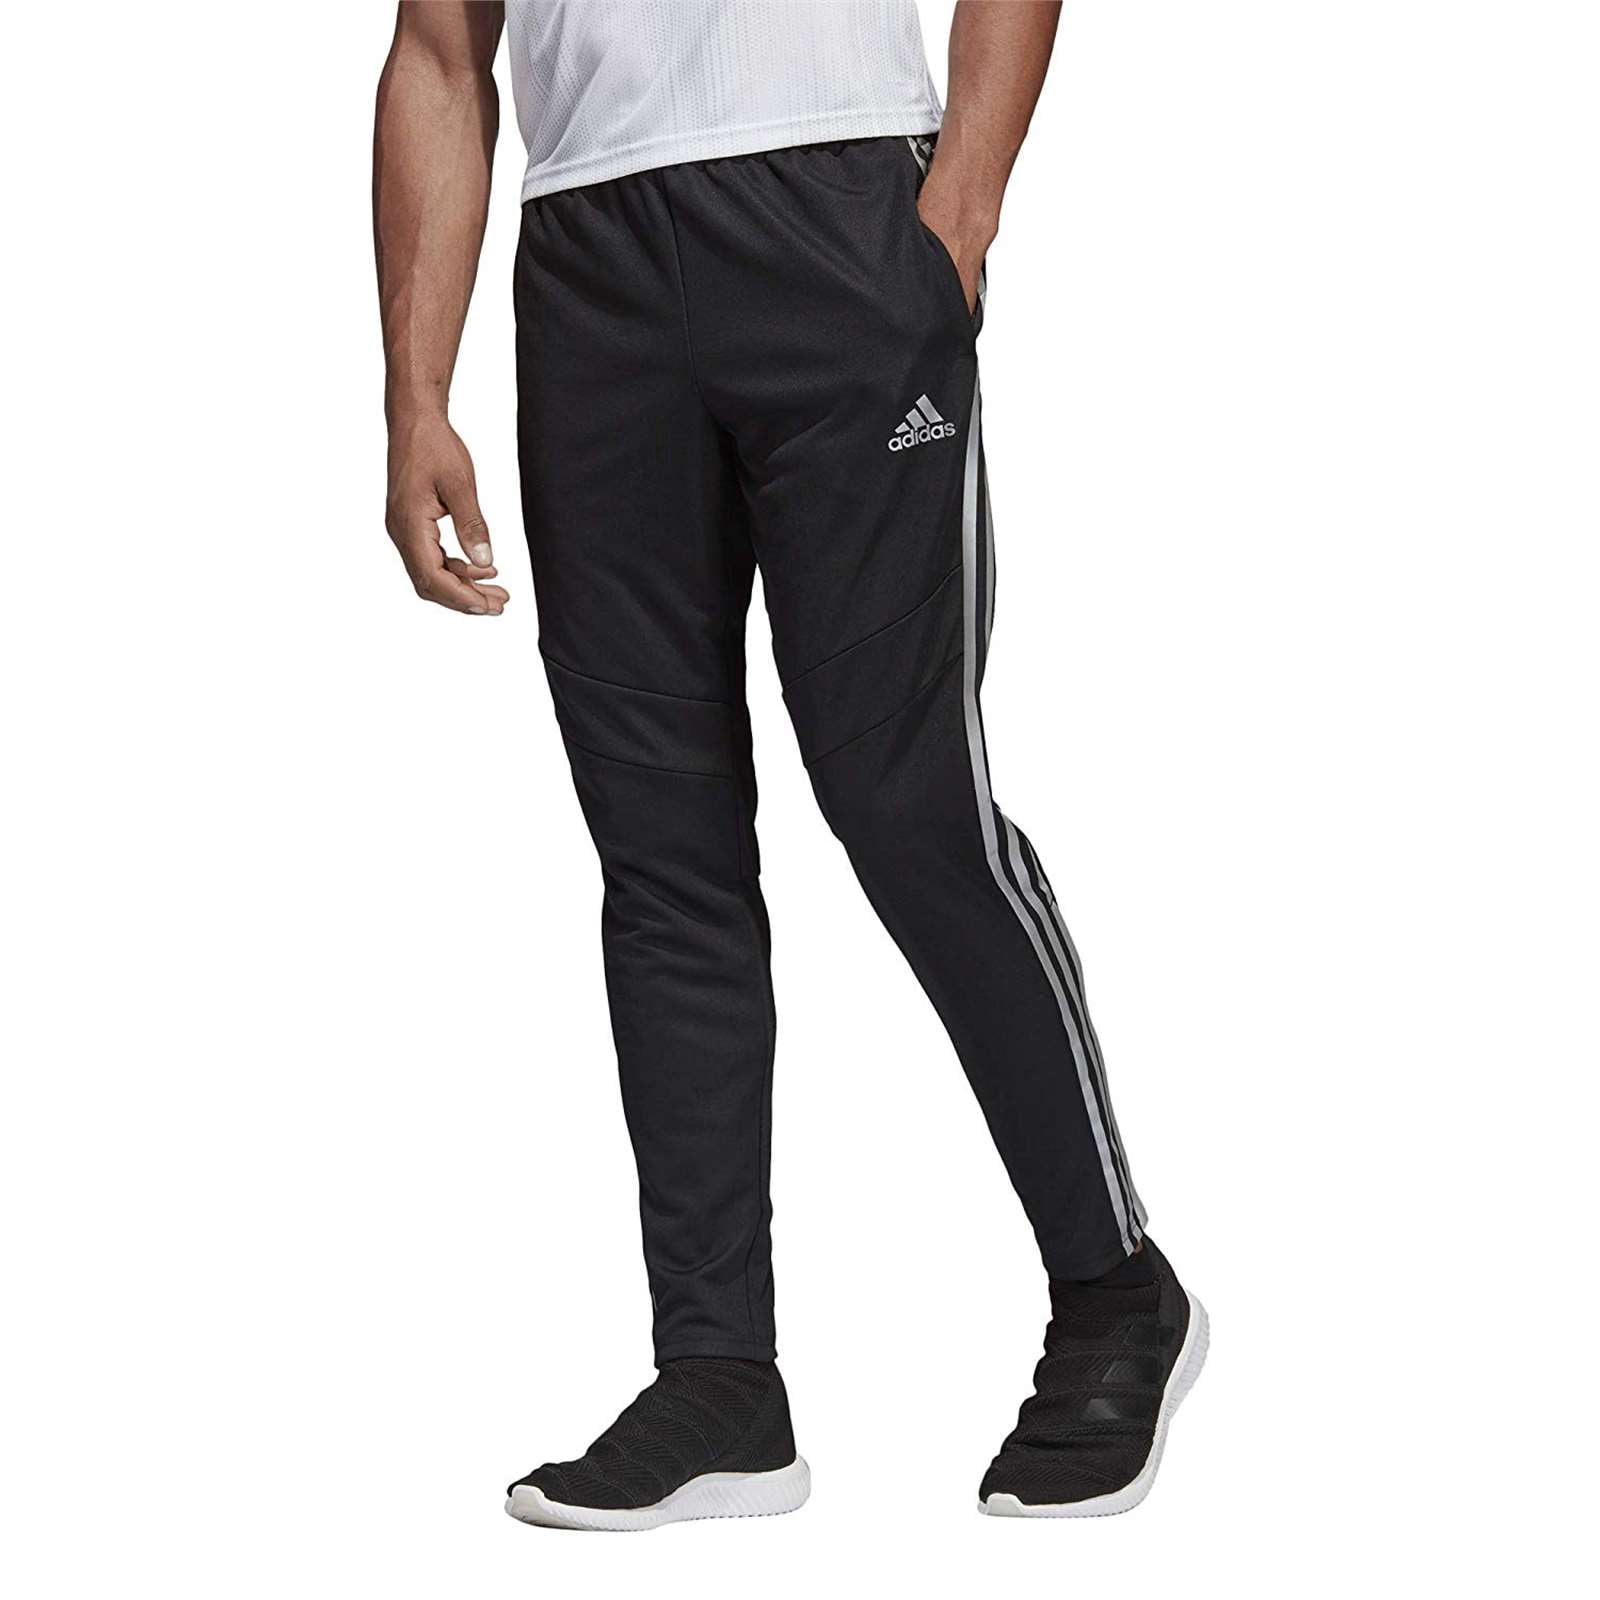 New Adidas Tiro 19 Climacool Men's Athletic Workout Training Slim Fit ...